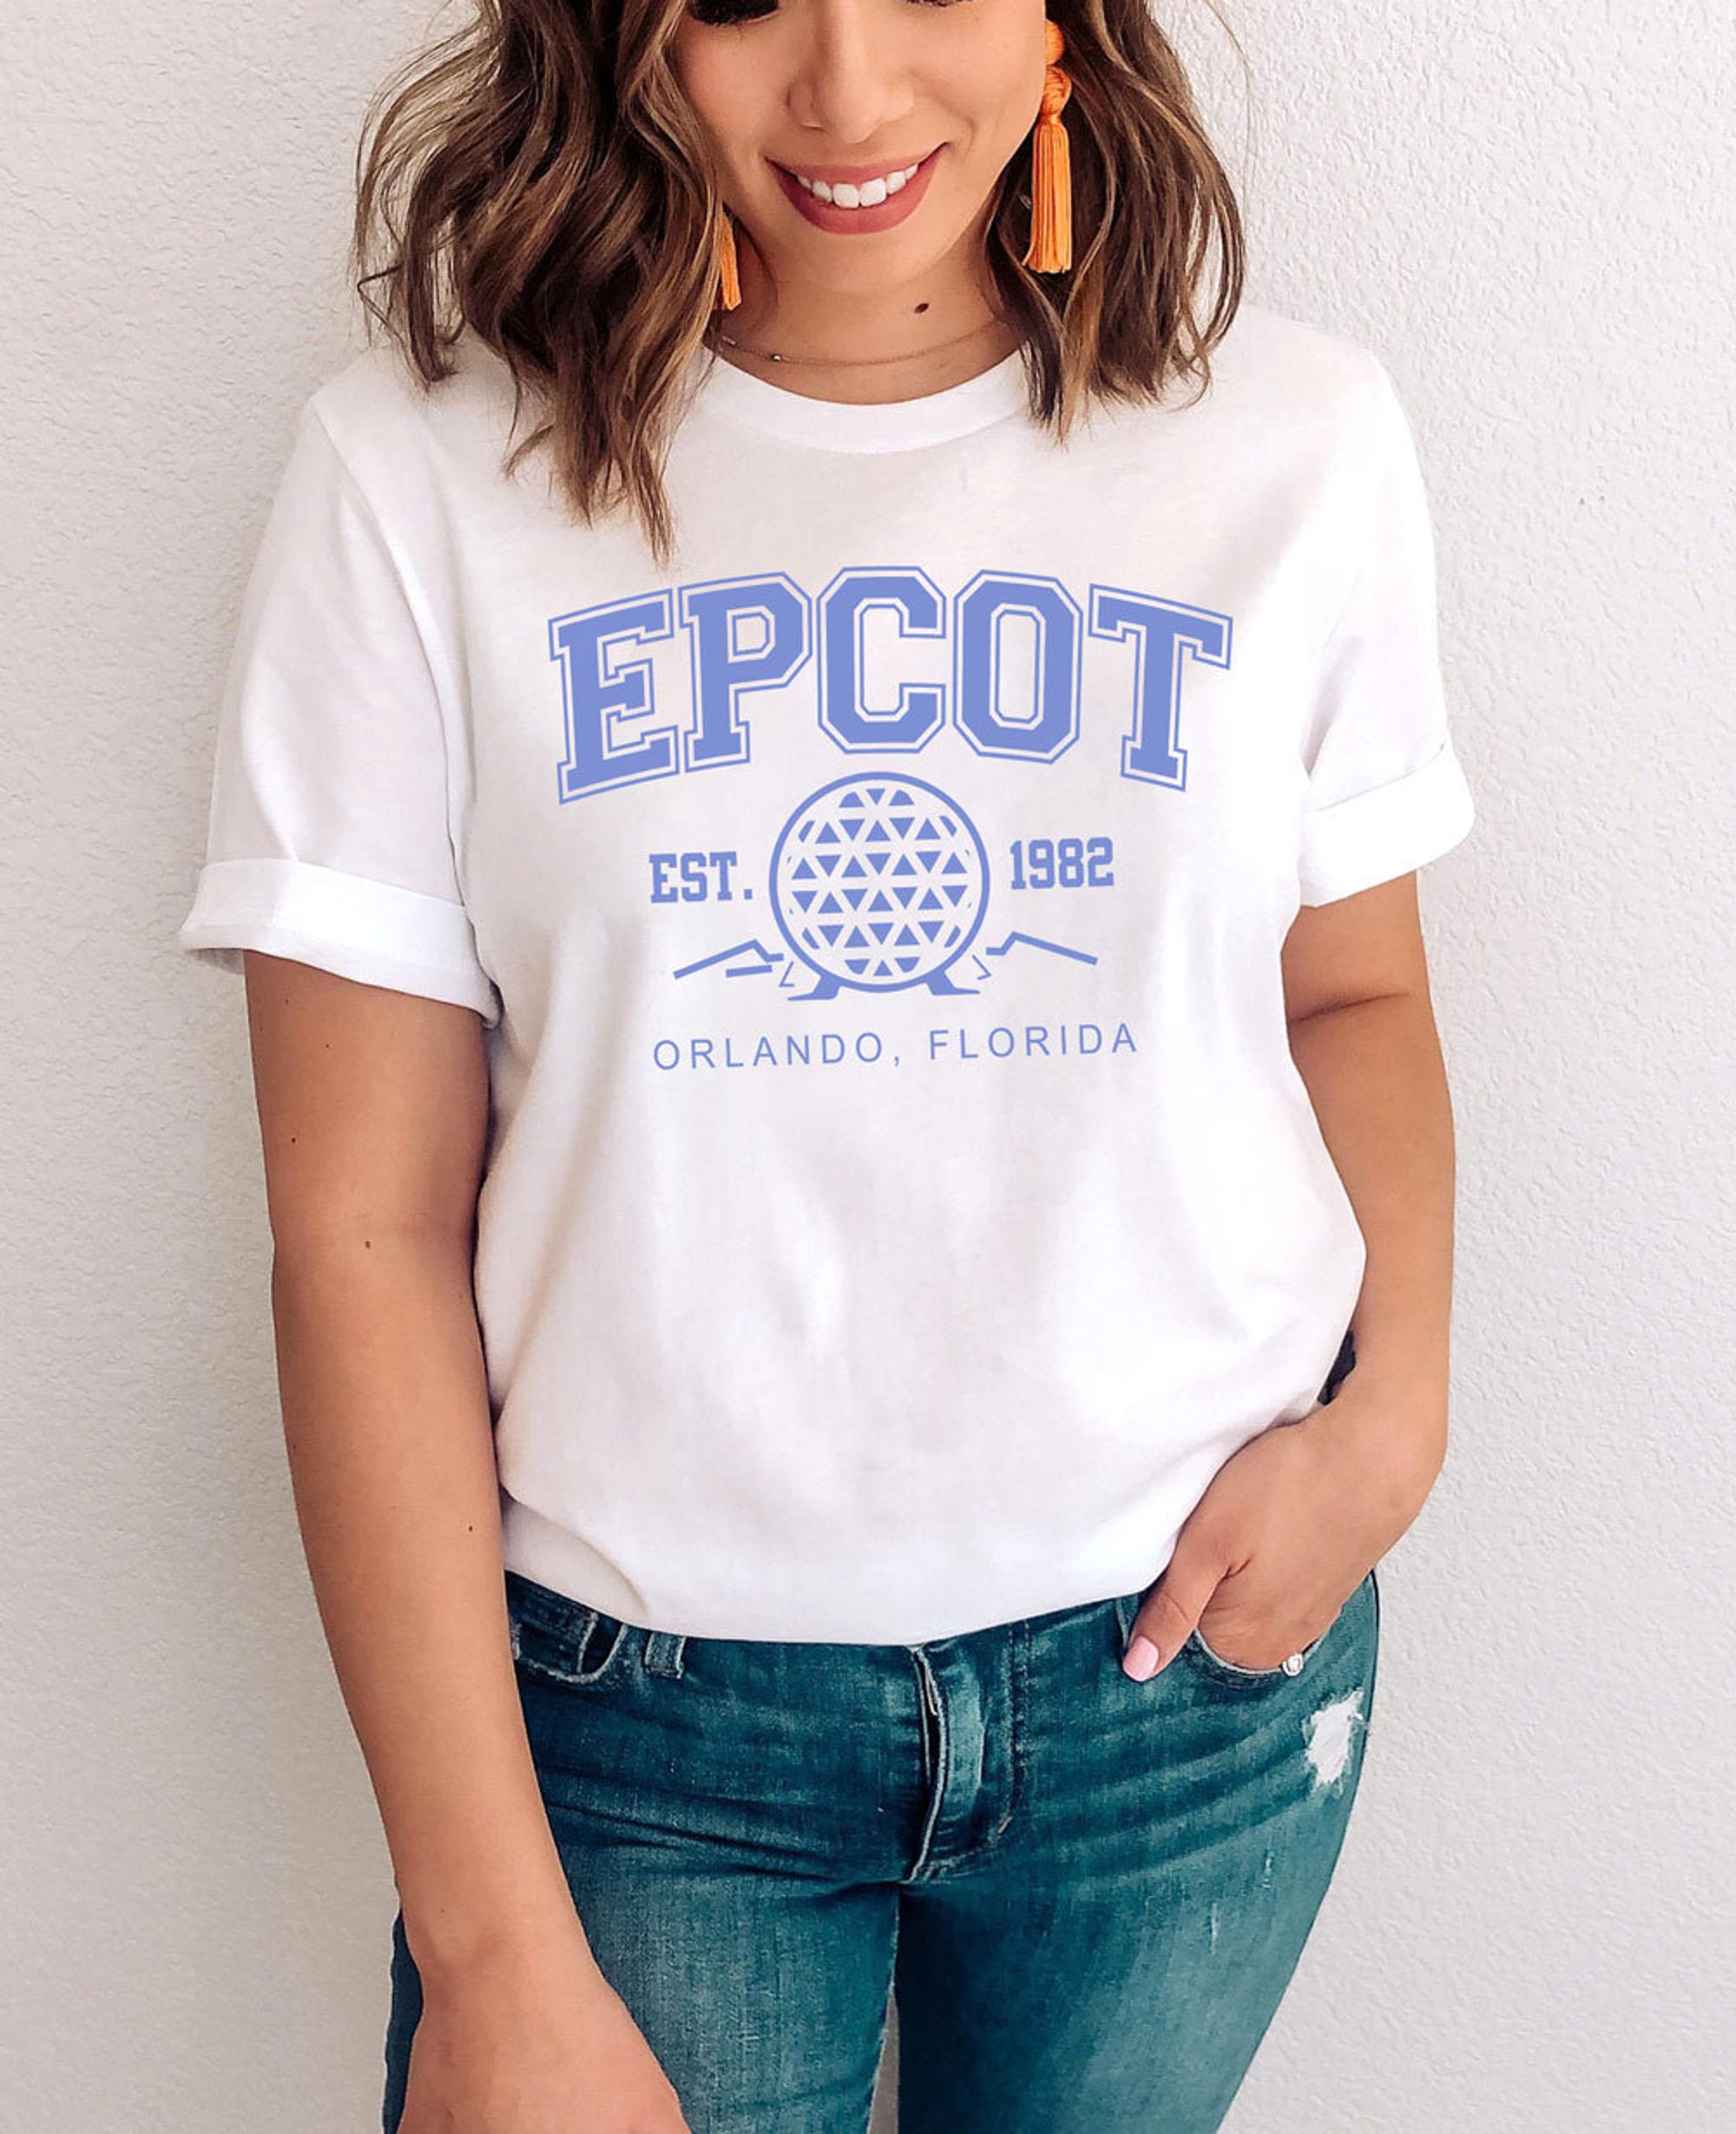 Discover Epcot Est 1982 tee shirt, Walt Disney World shirts